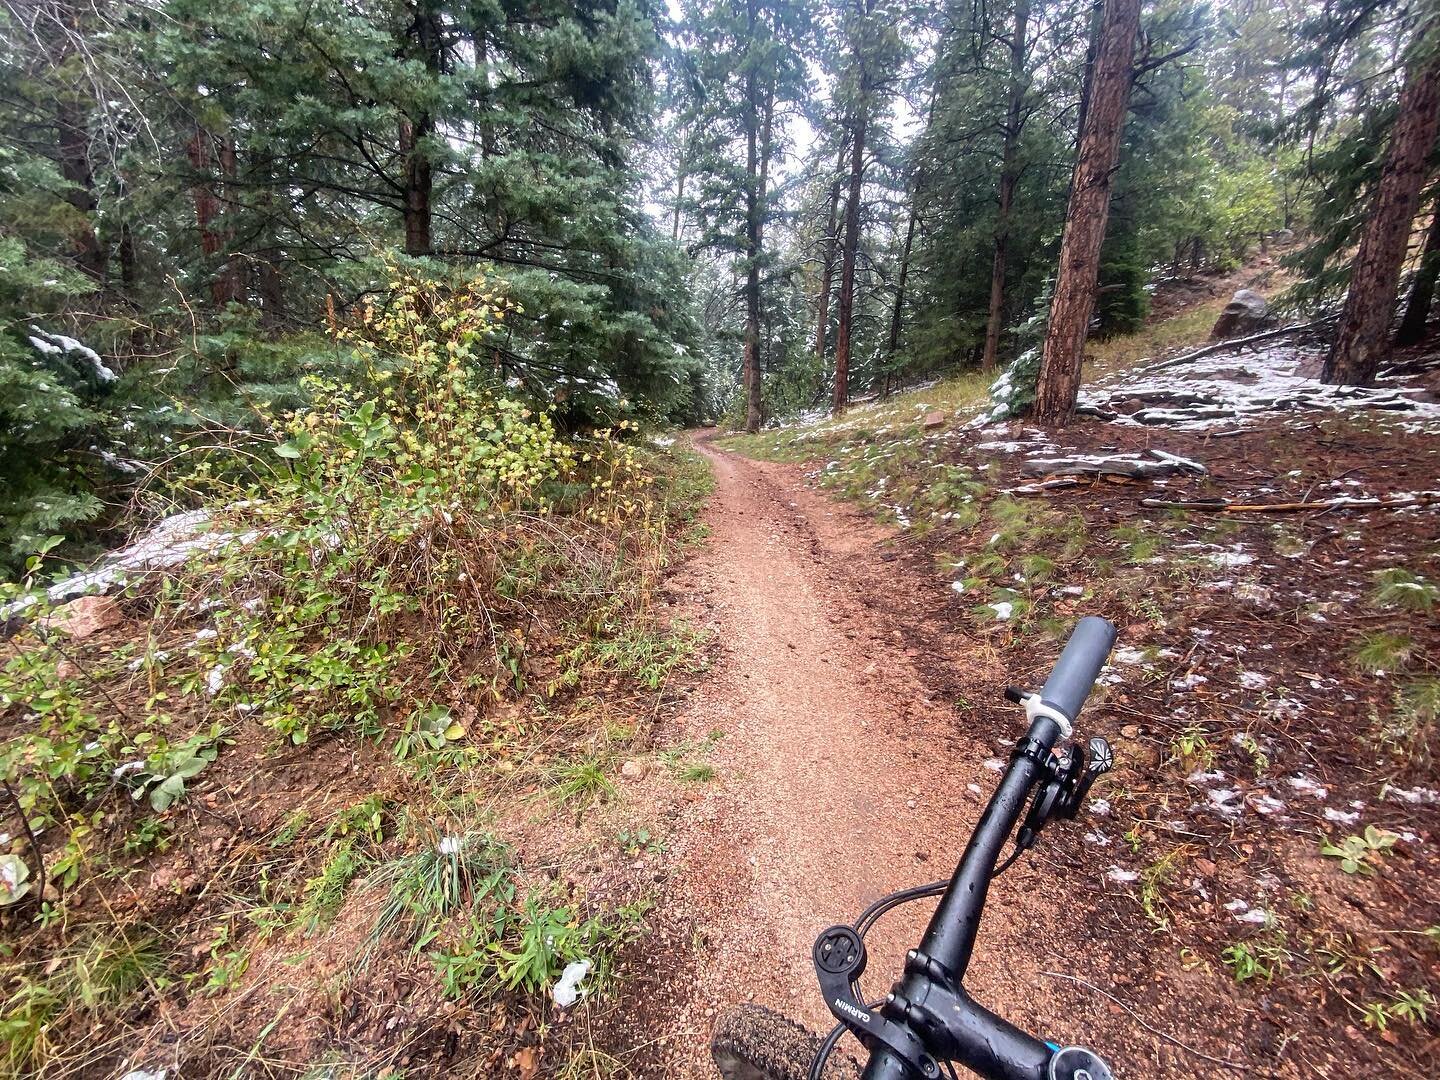 Colorado fall is coming. ❄️ ⛄️ ⁣
.⁣
.⁣
.⁣
.⁣
.⁣
#cyclinglife #fitness #bikes #mountains #bike #mountainbike #enduromtb #mtblove #ciclismo #sport #biking #enduro #instabike #downhillmtb #ride #cyclingpics #trekbikes #cycling #bikelife #downhill #bicic